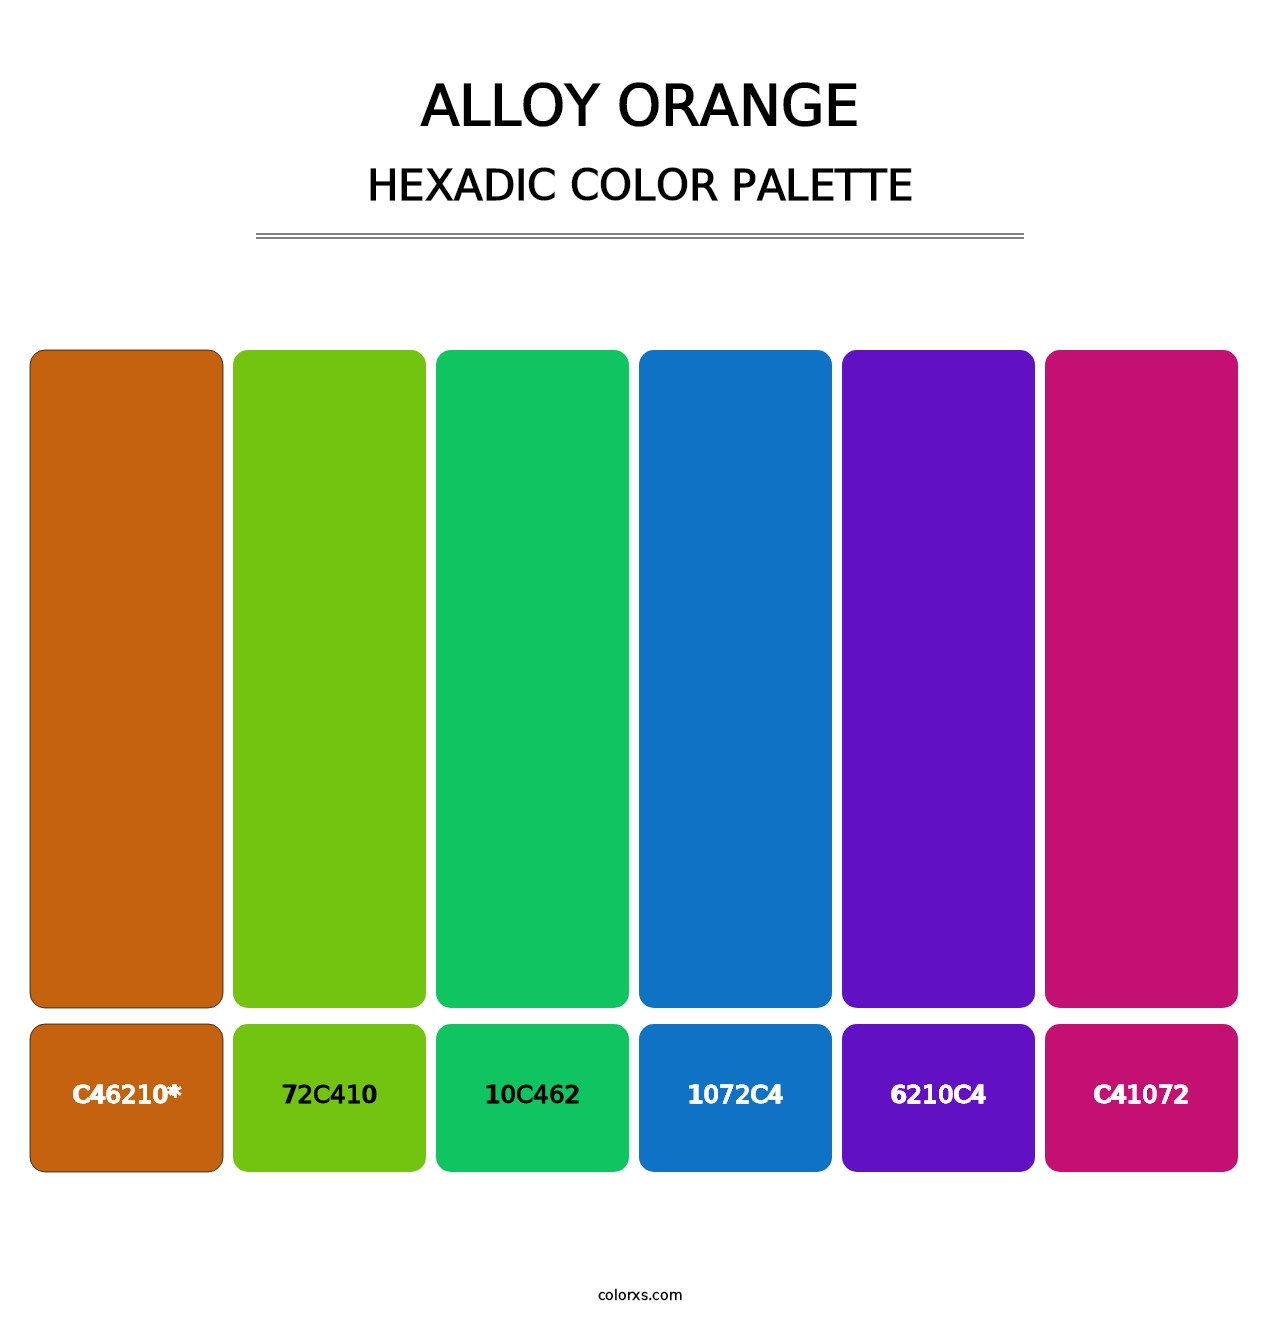 Alloy Orange - Hexadic Color Palette